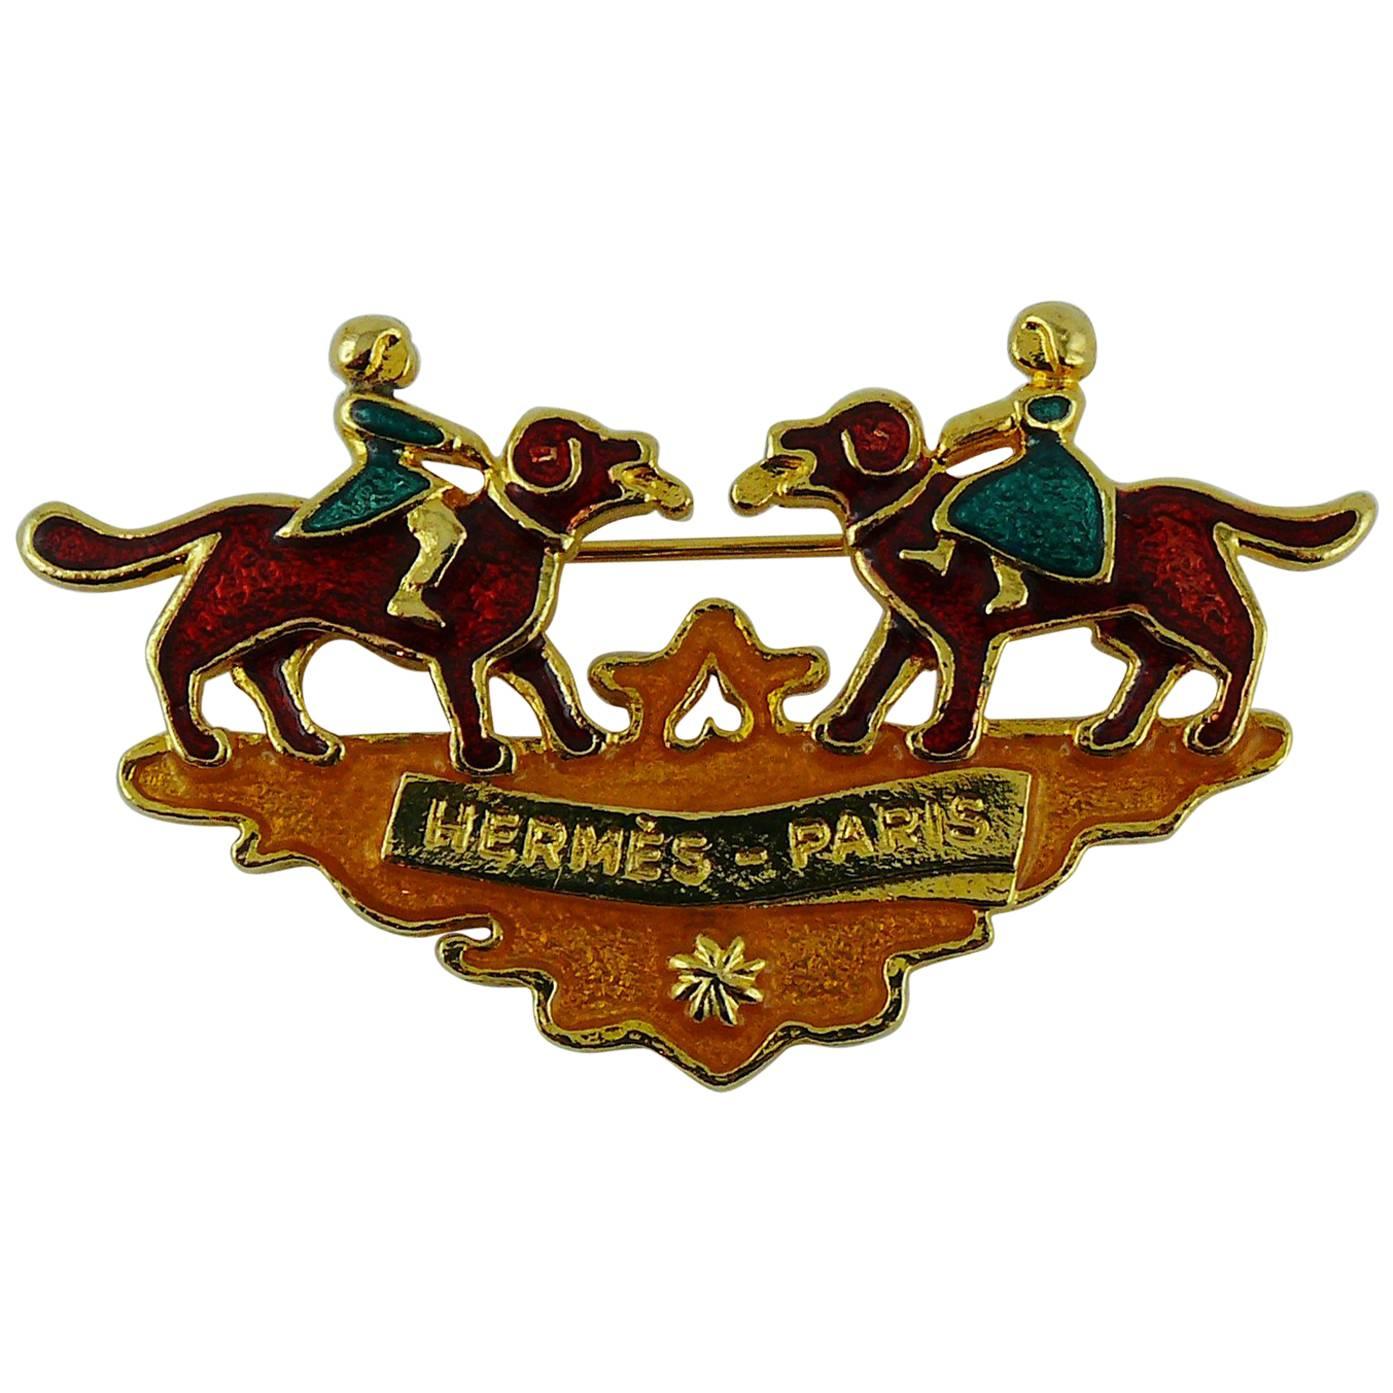 Hermes Paris Enamel Children and Dogs Brooch